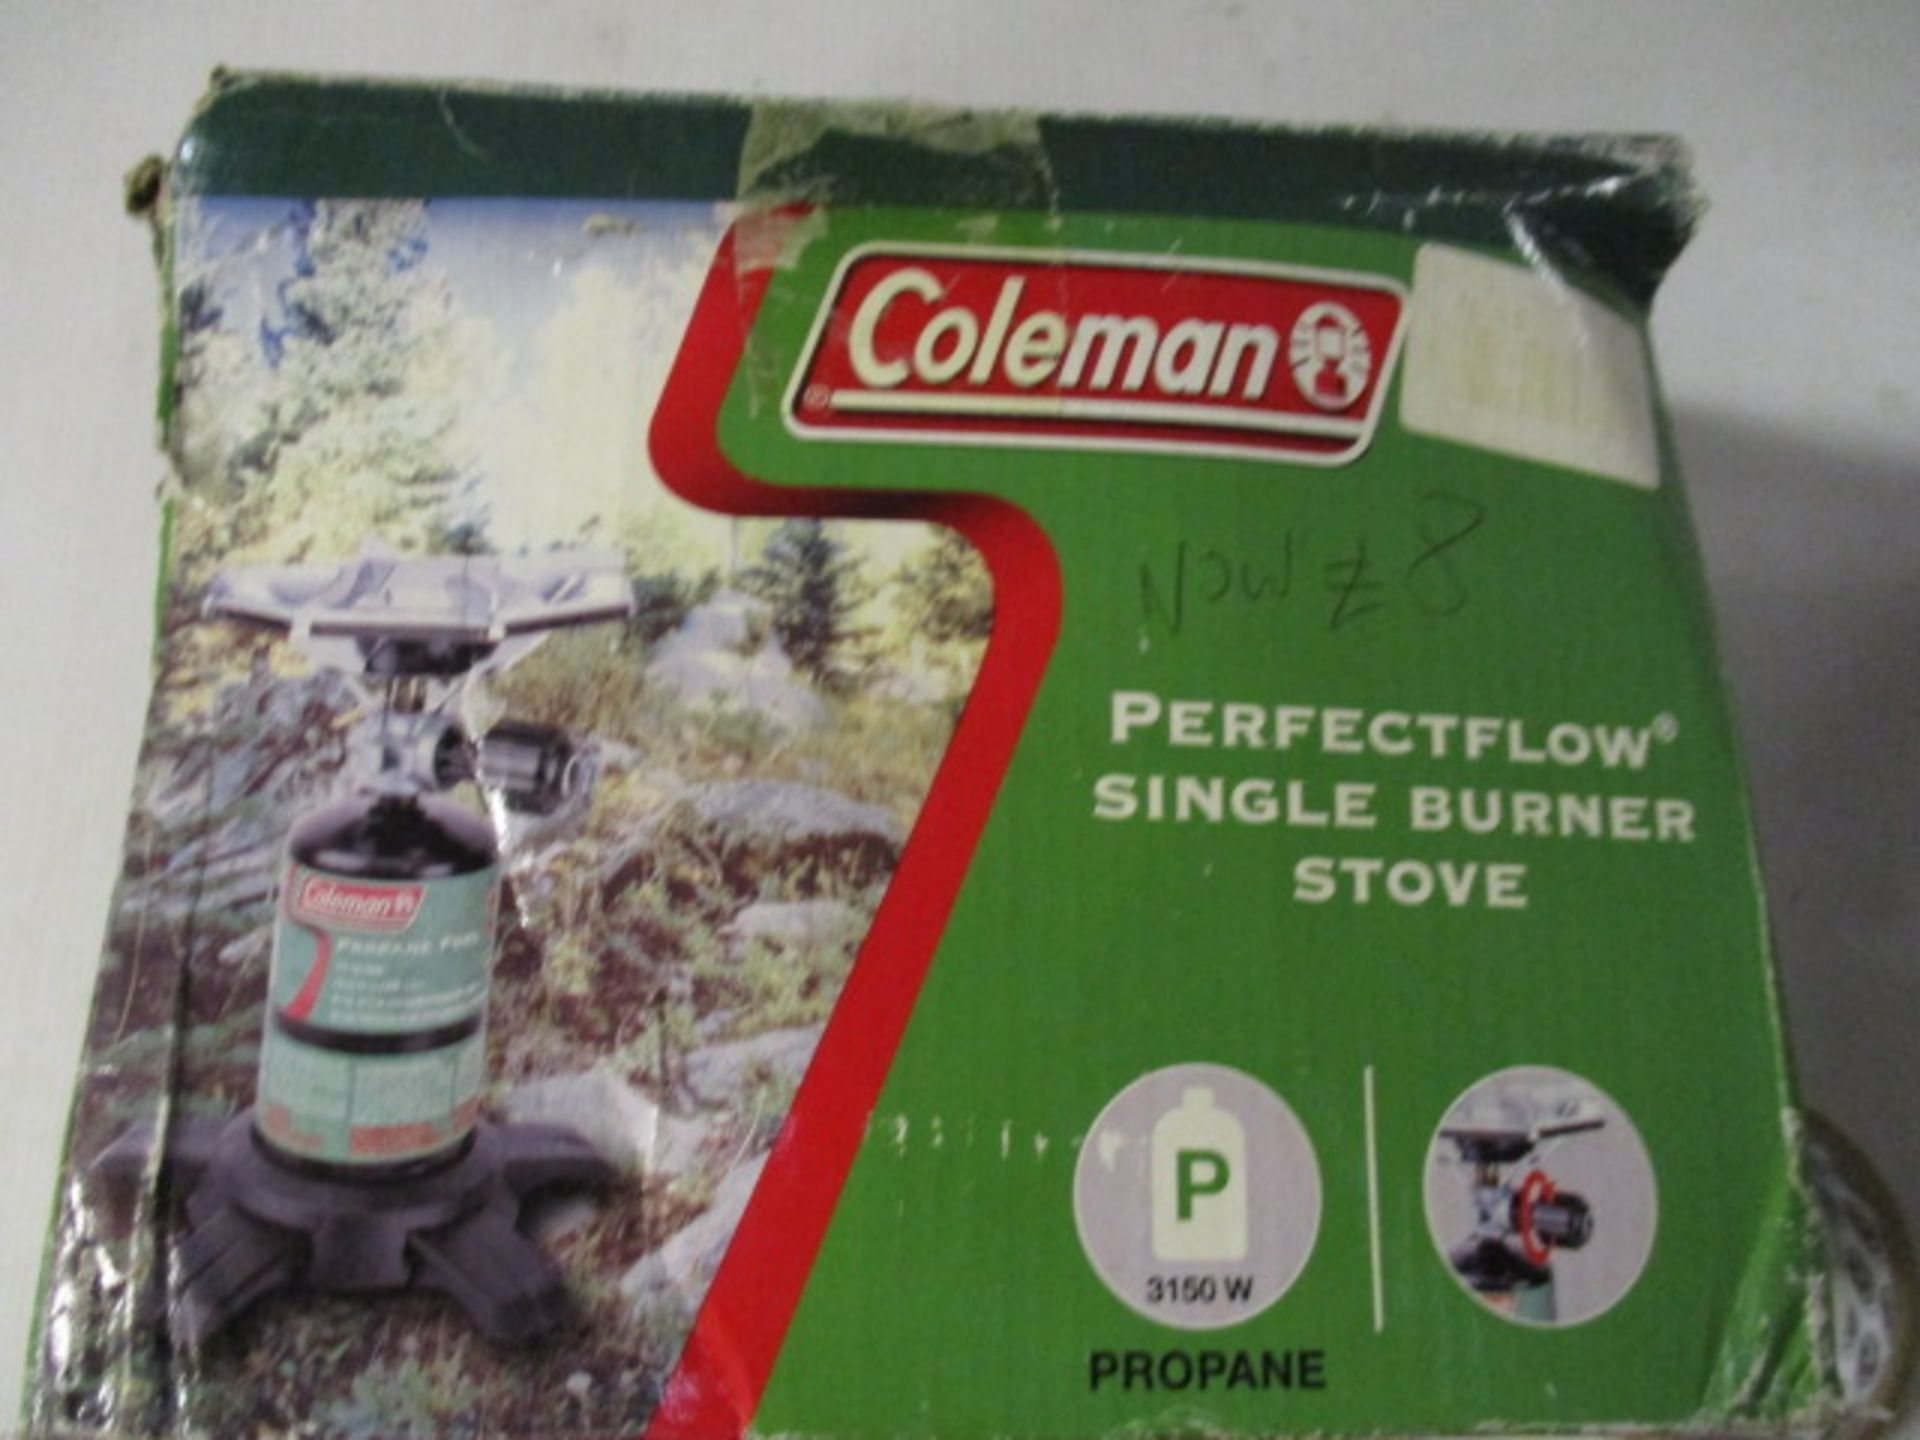 Coleman portable gas stove - - new